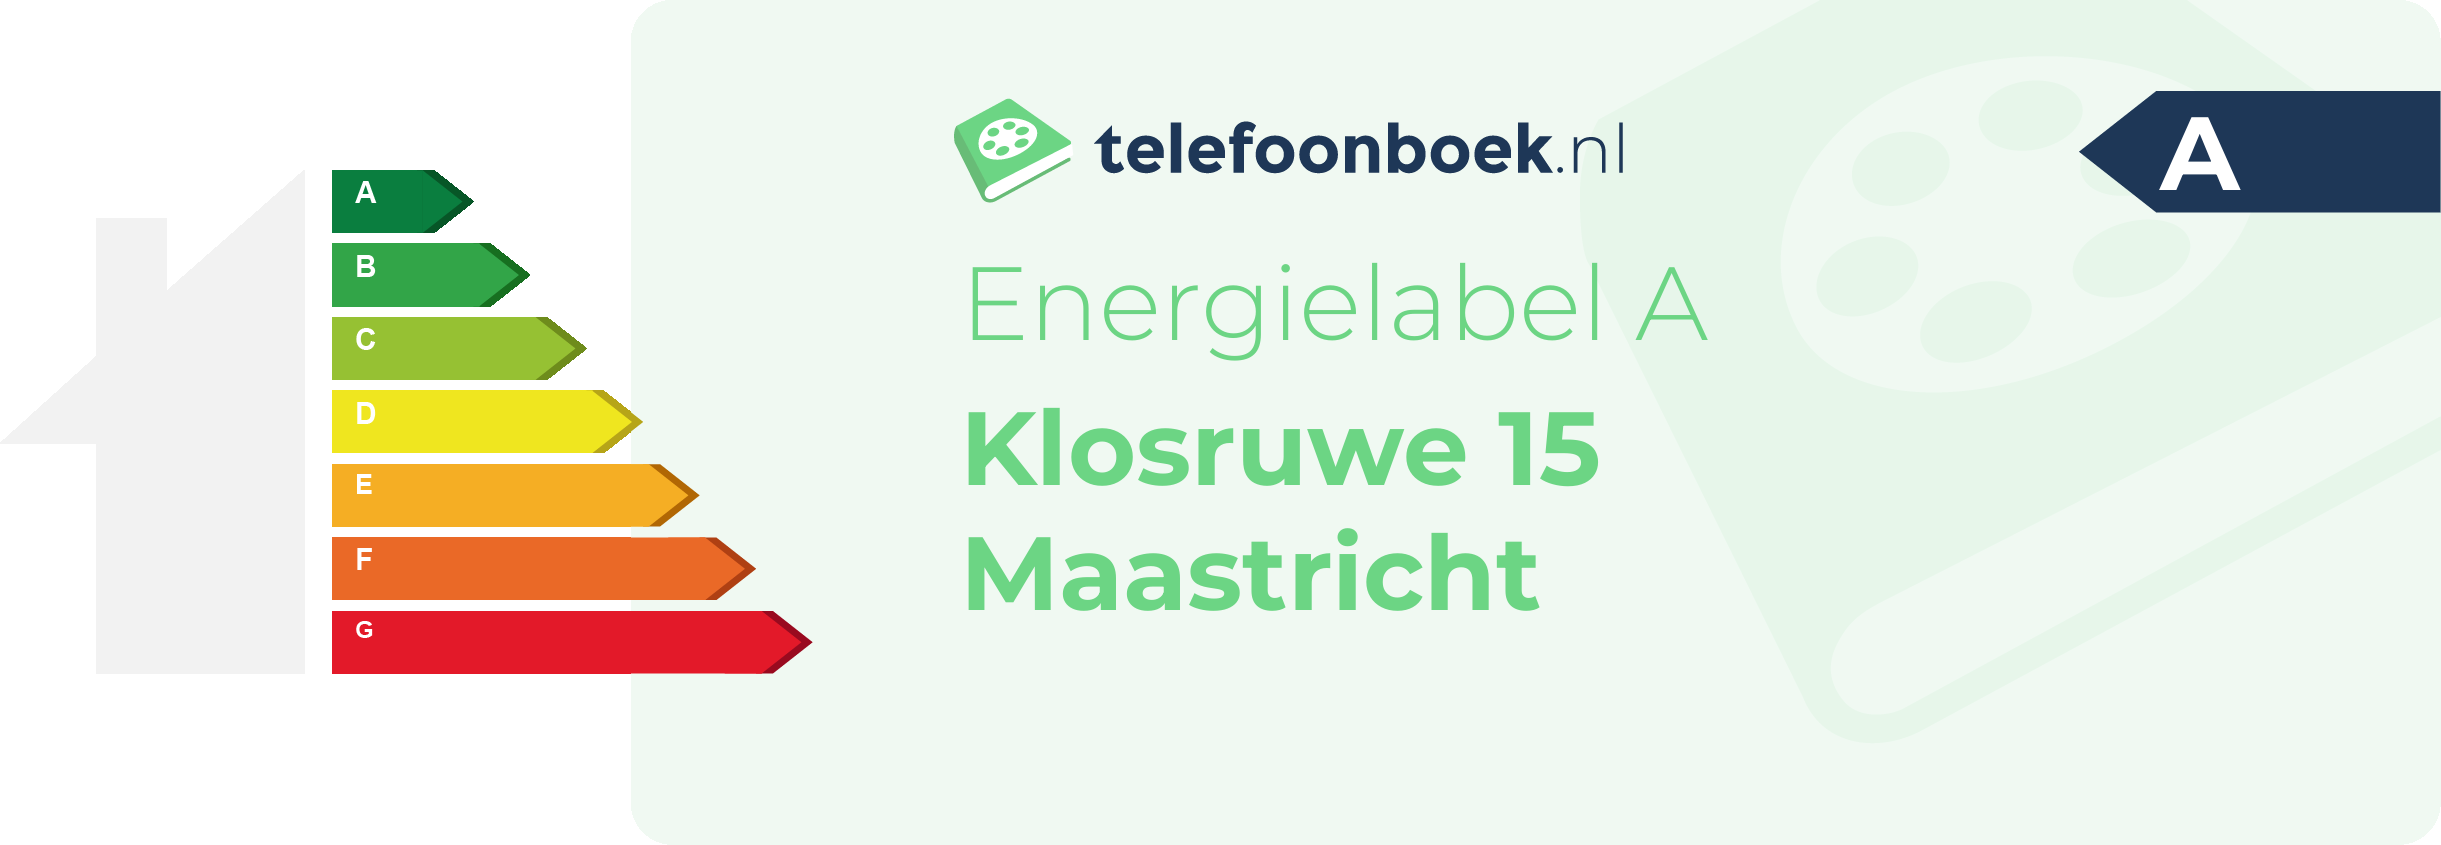 Energielabel Klosruwe 15 Maastricht